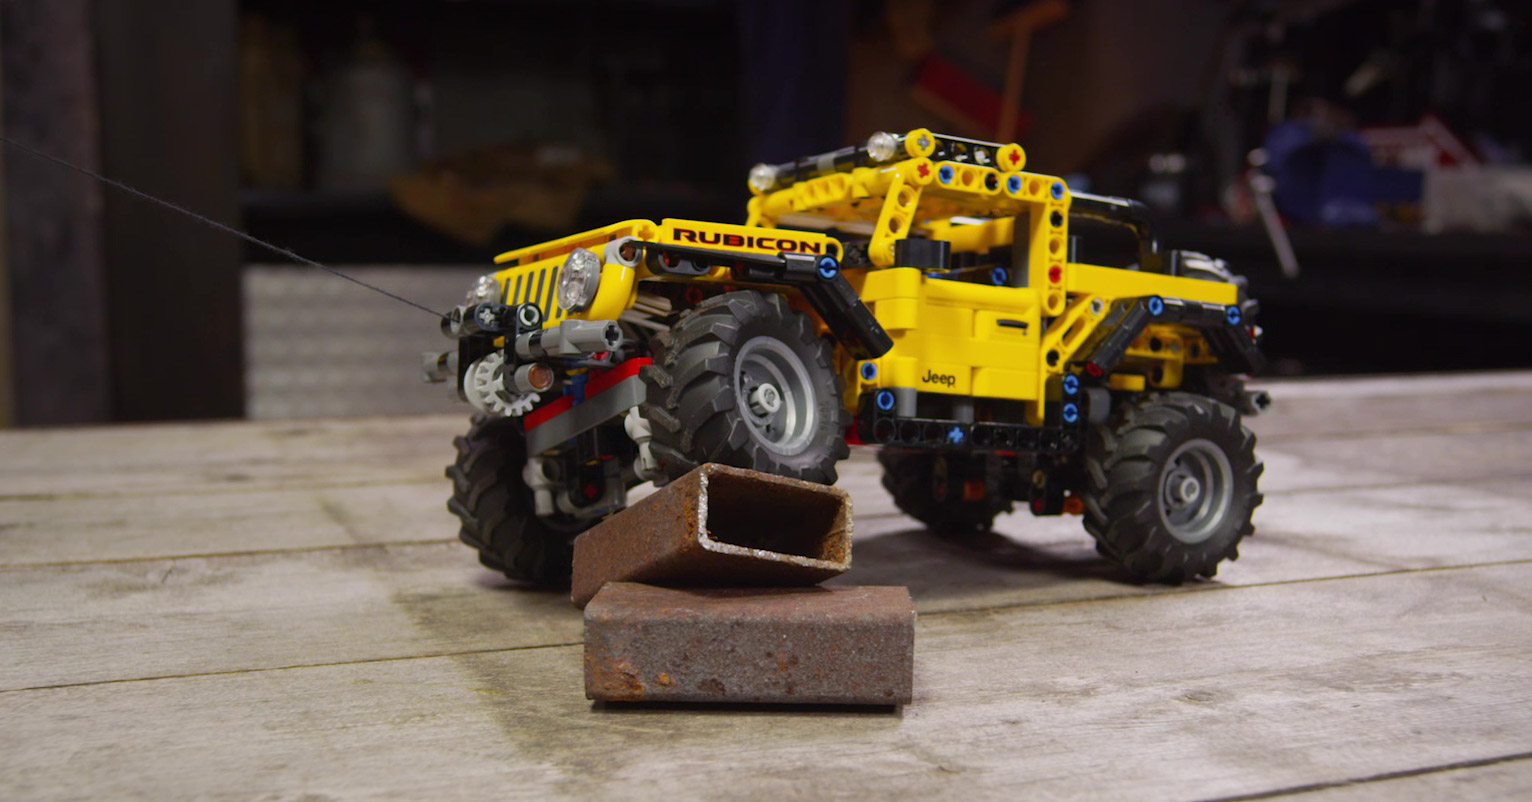 Lego Technic Jeep Wrangler Rubicon revealed â 665-piece set with articulating suspension and 